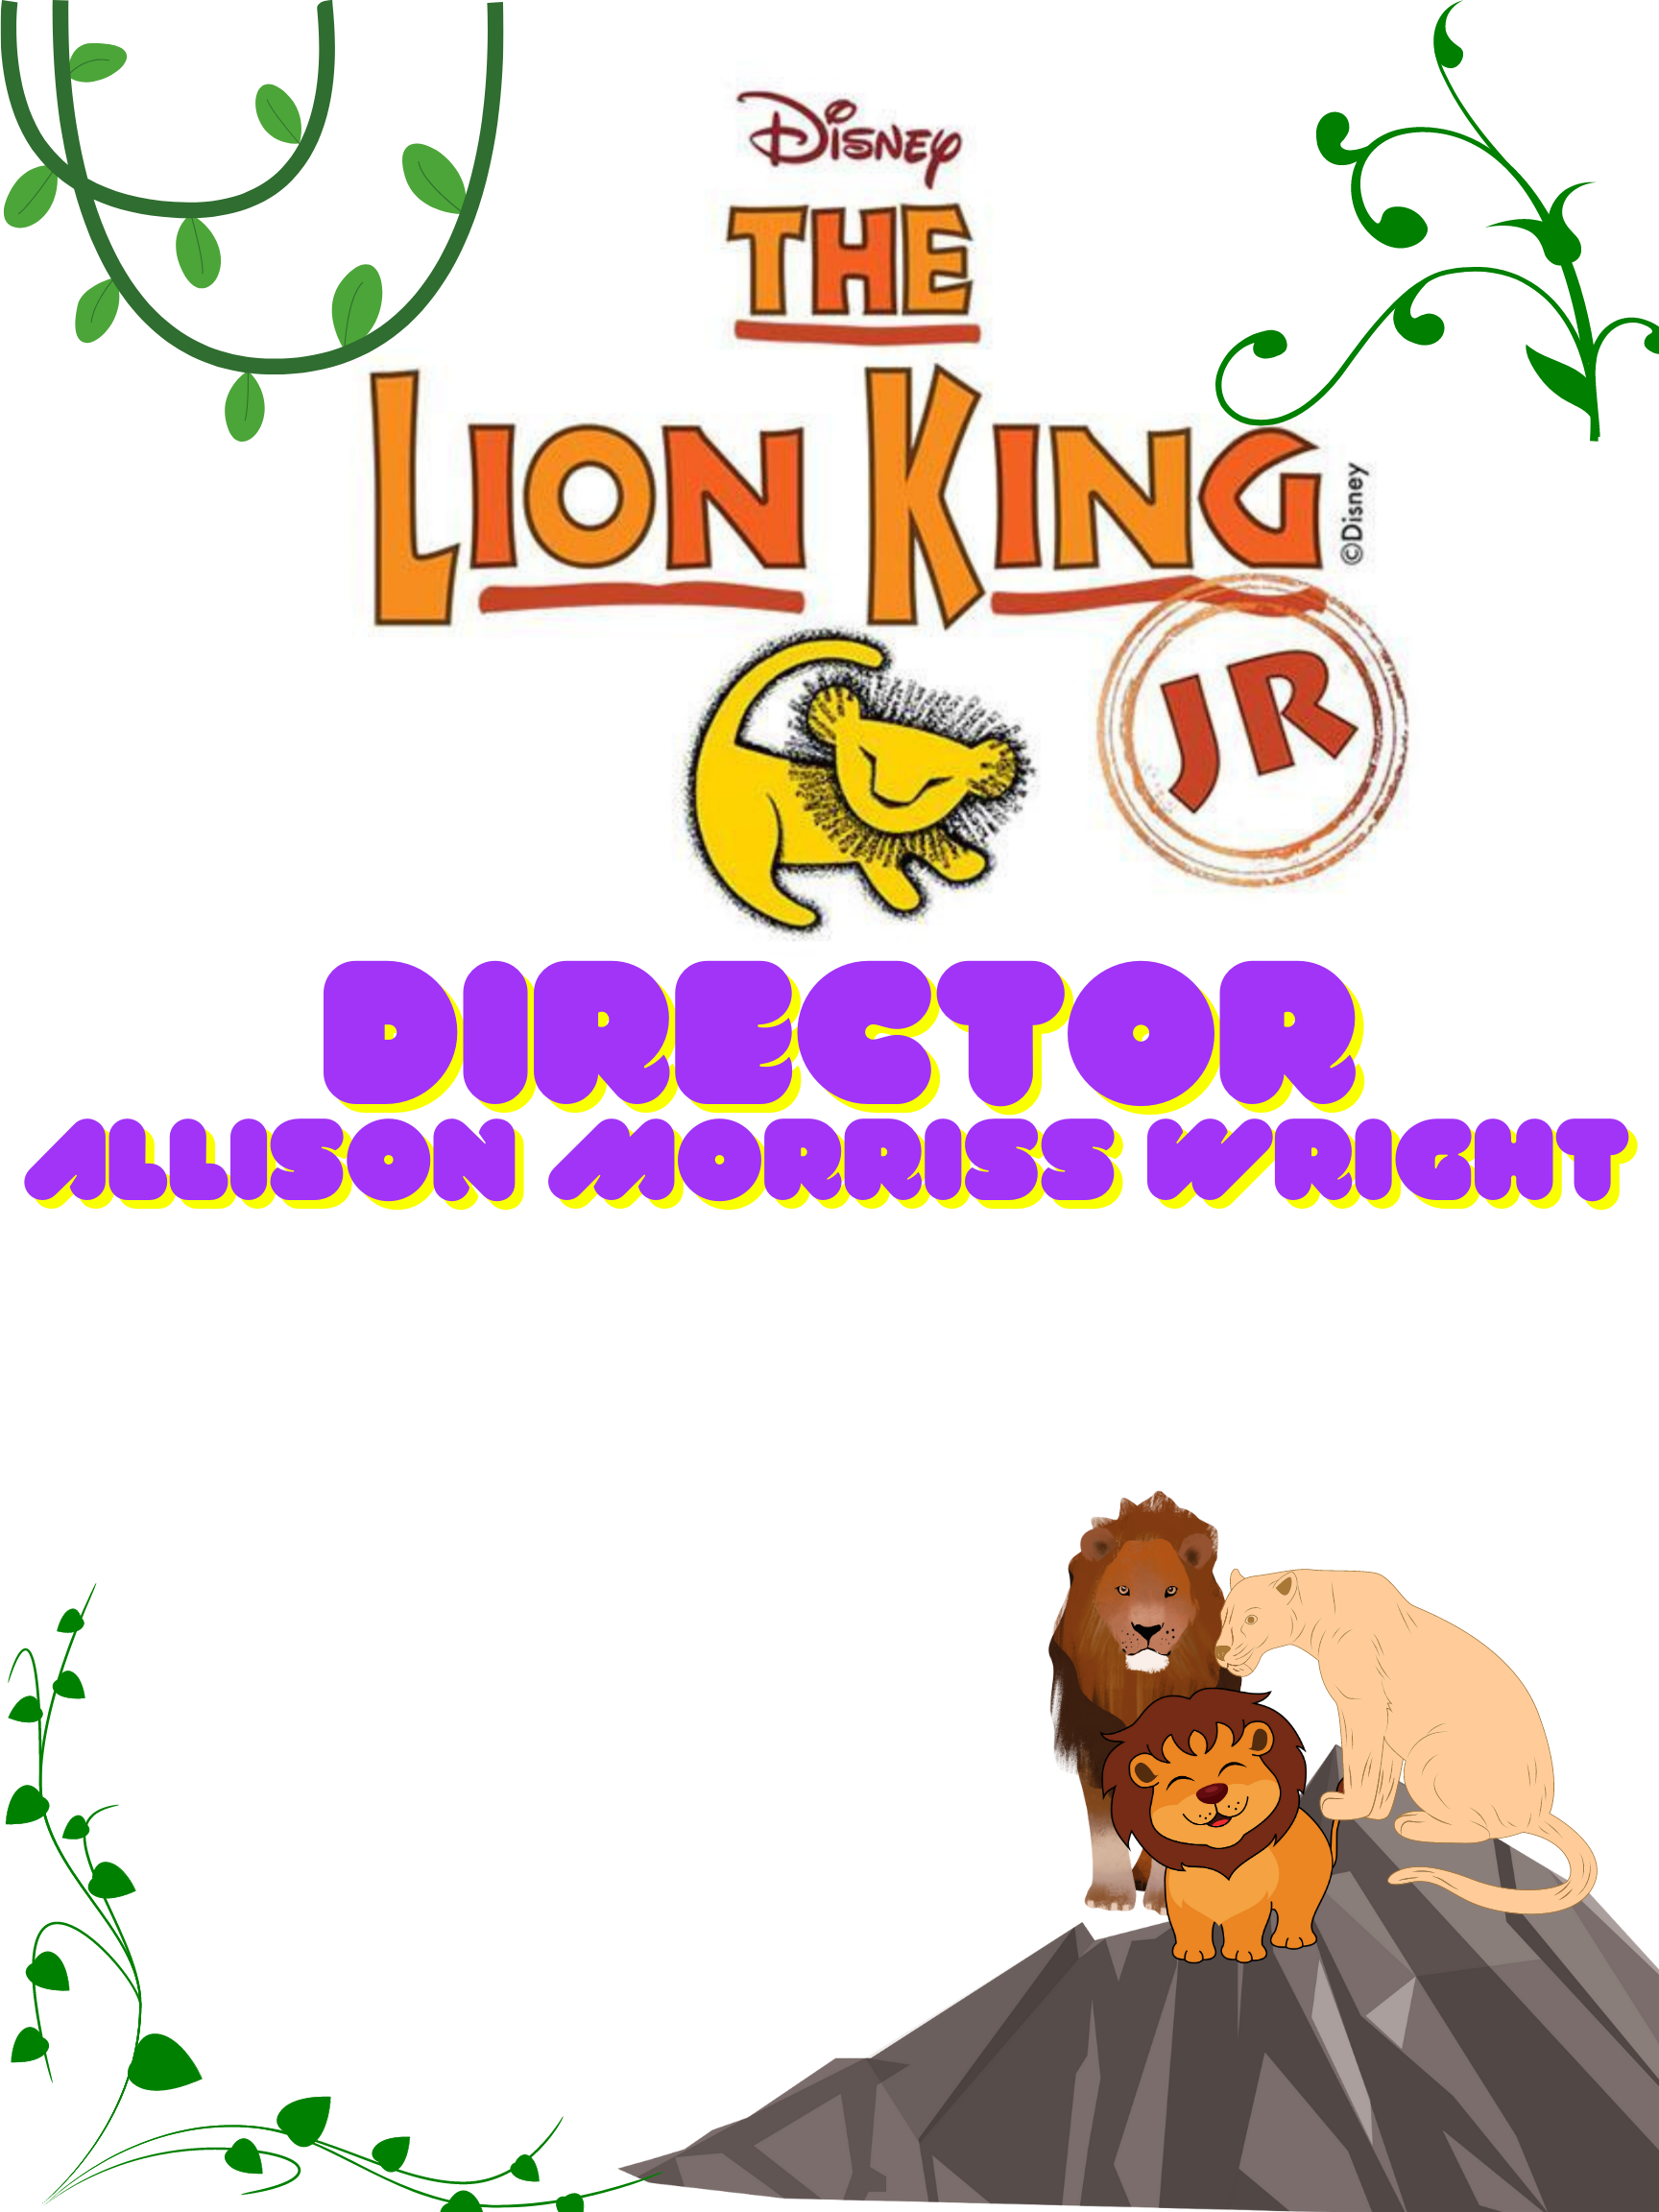 lion king1 copy.png